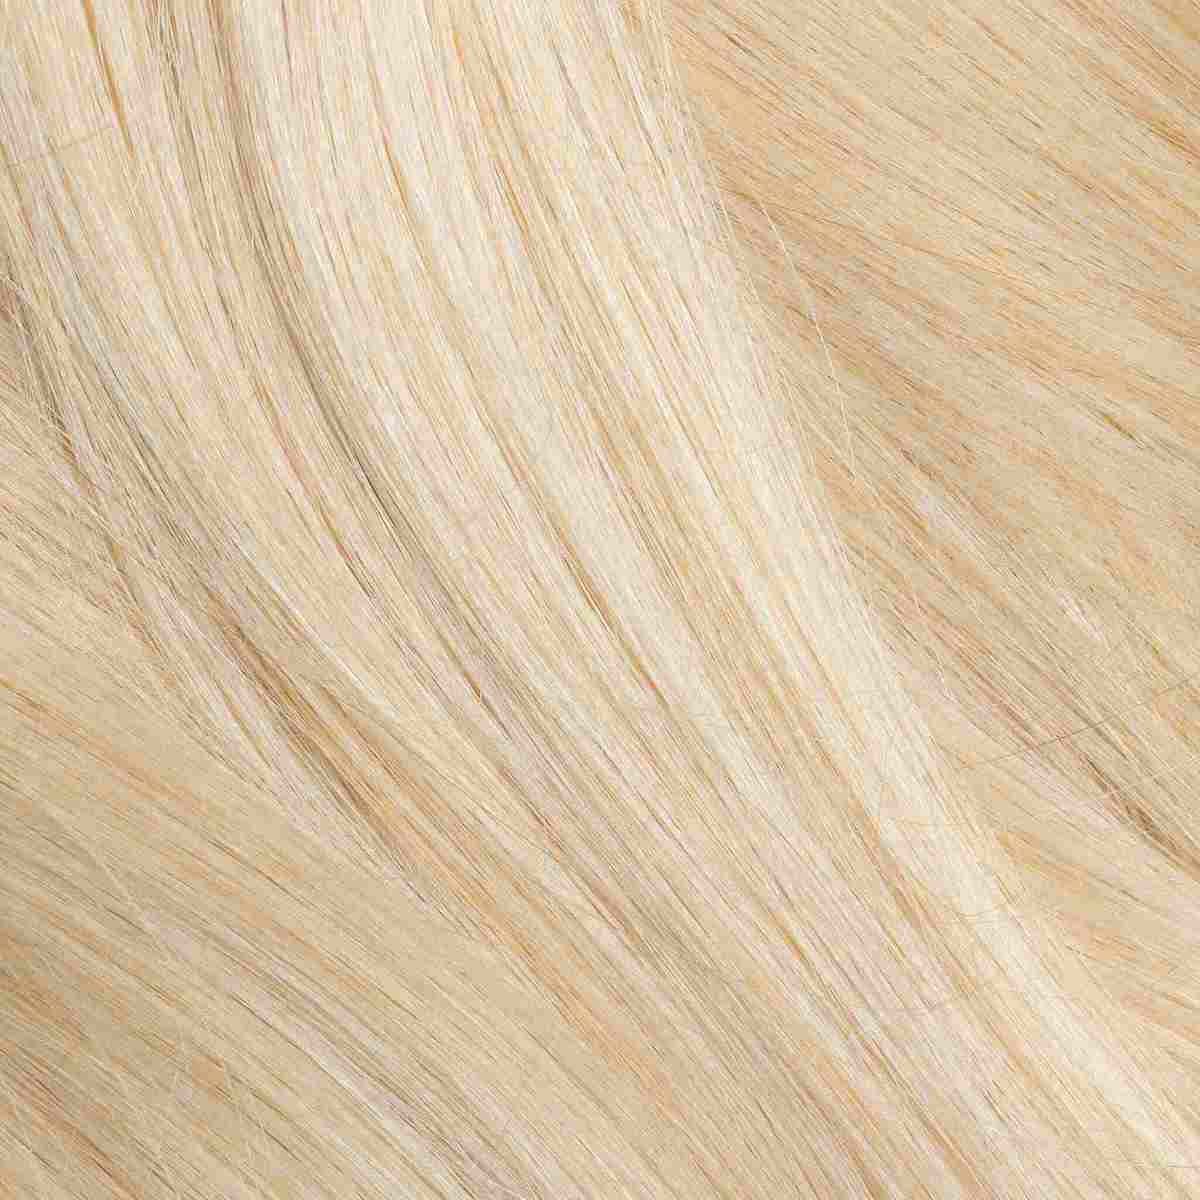 Genius (Micro) Weft 24" 94g Professional Hair Extensions - #60 Ash Blonde